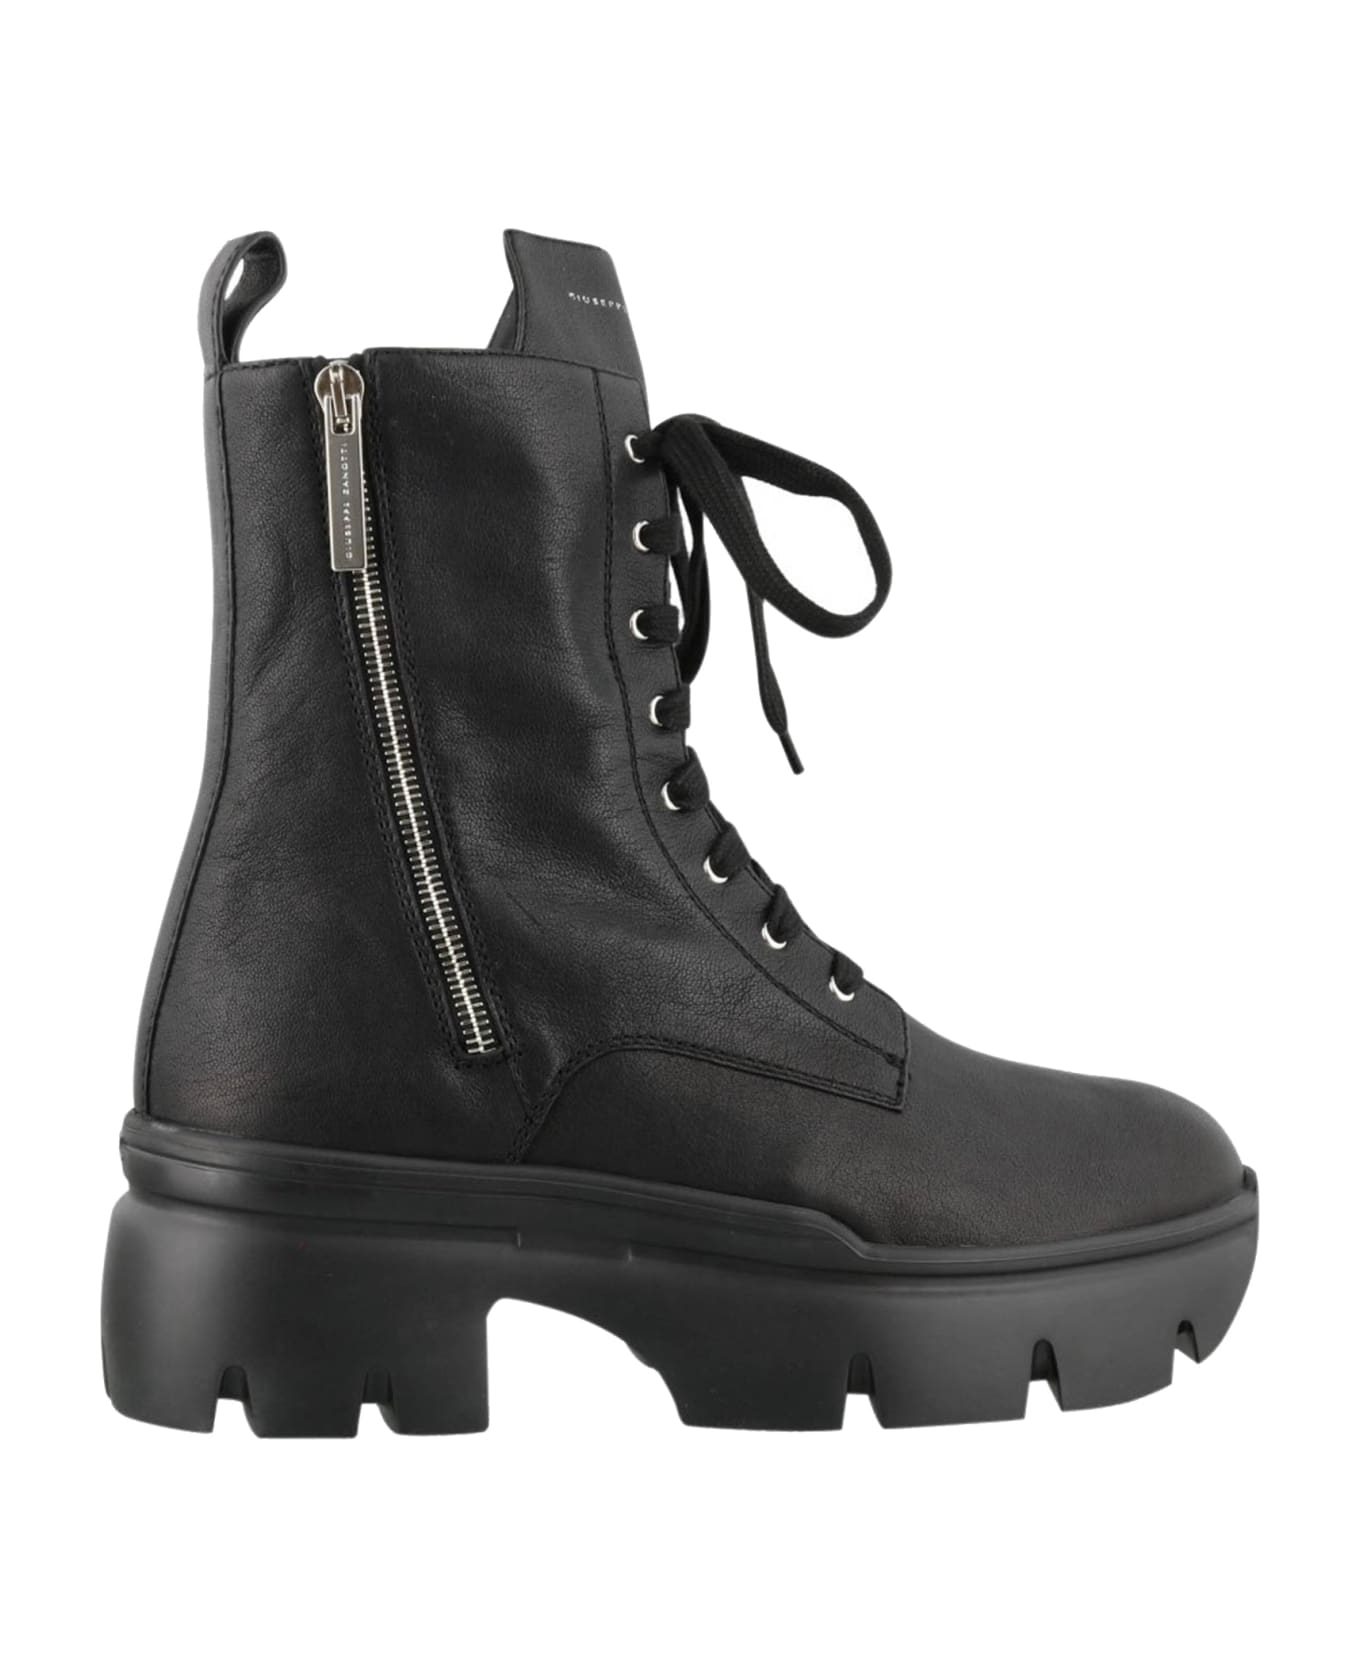 Giuseppe Zanotti Design Apocalypse Leather Boots - Black